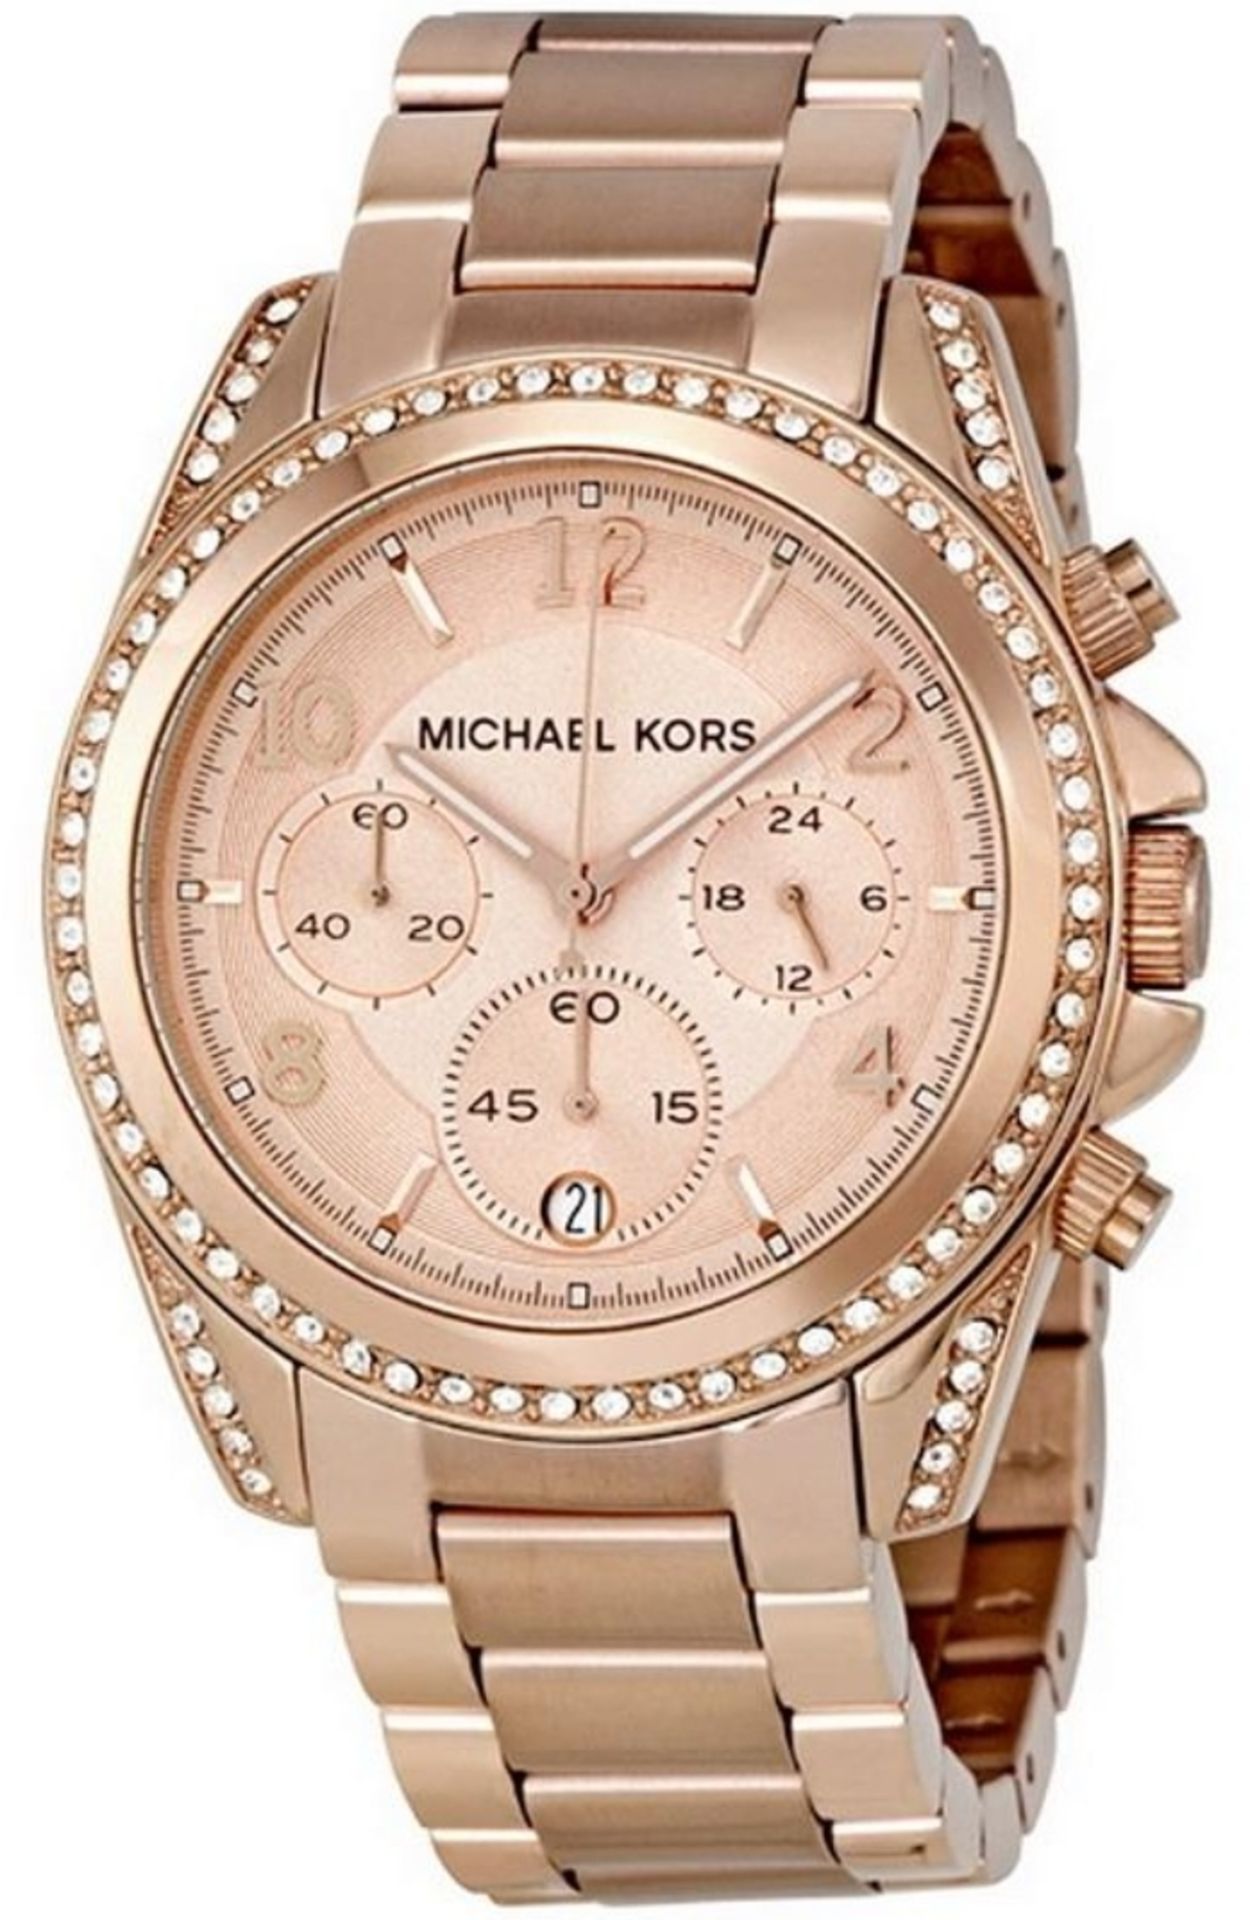 Michael Kors MK5263 Ladies Blair Chronograph Watch - Image 2 of 6